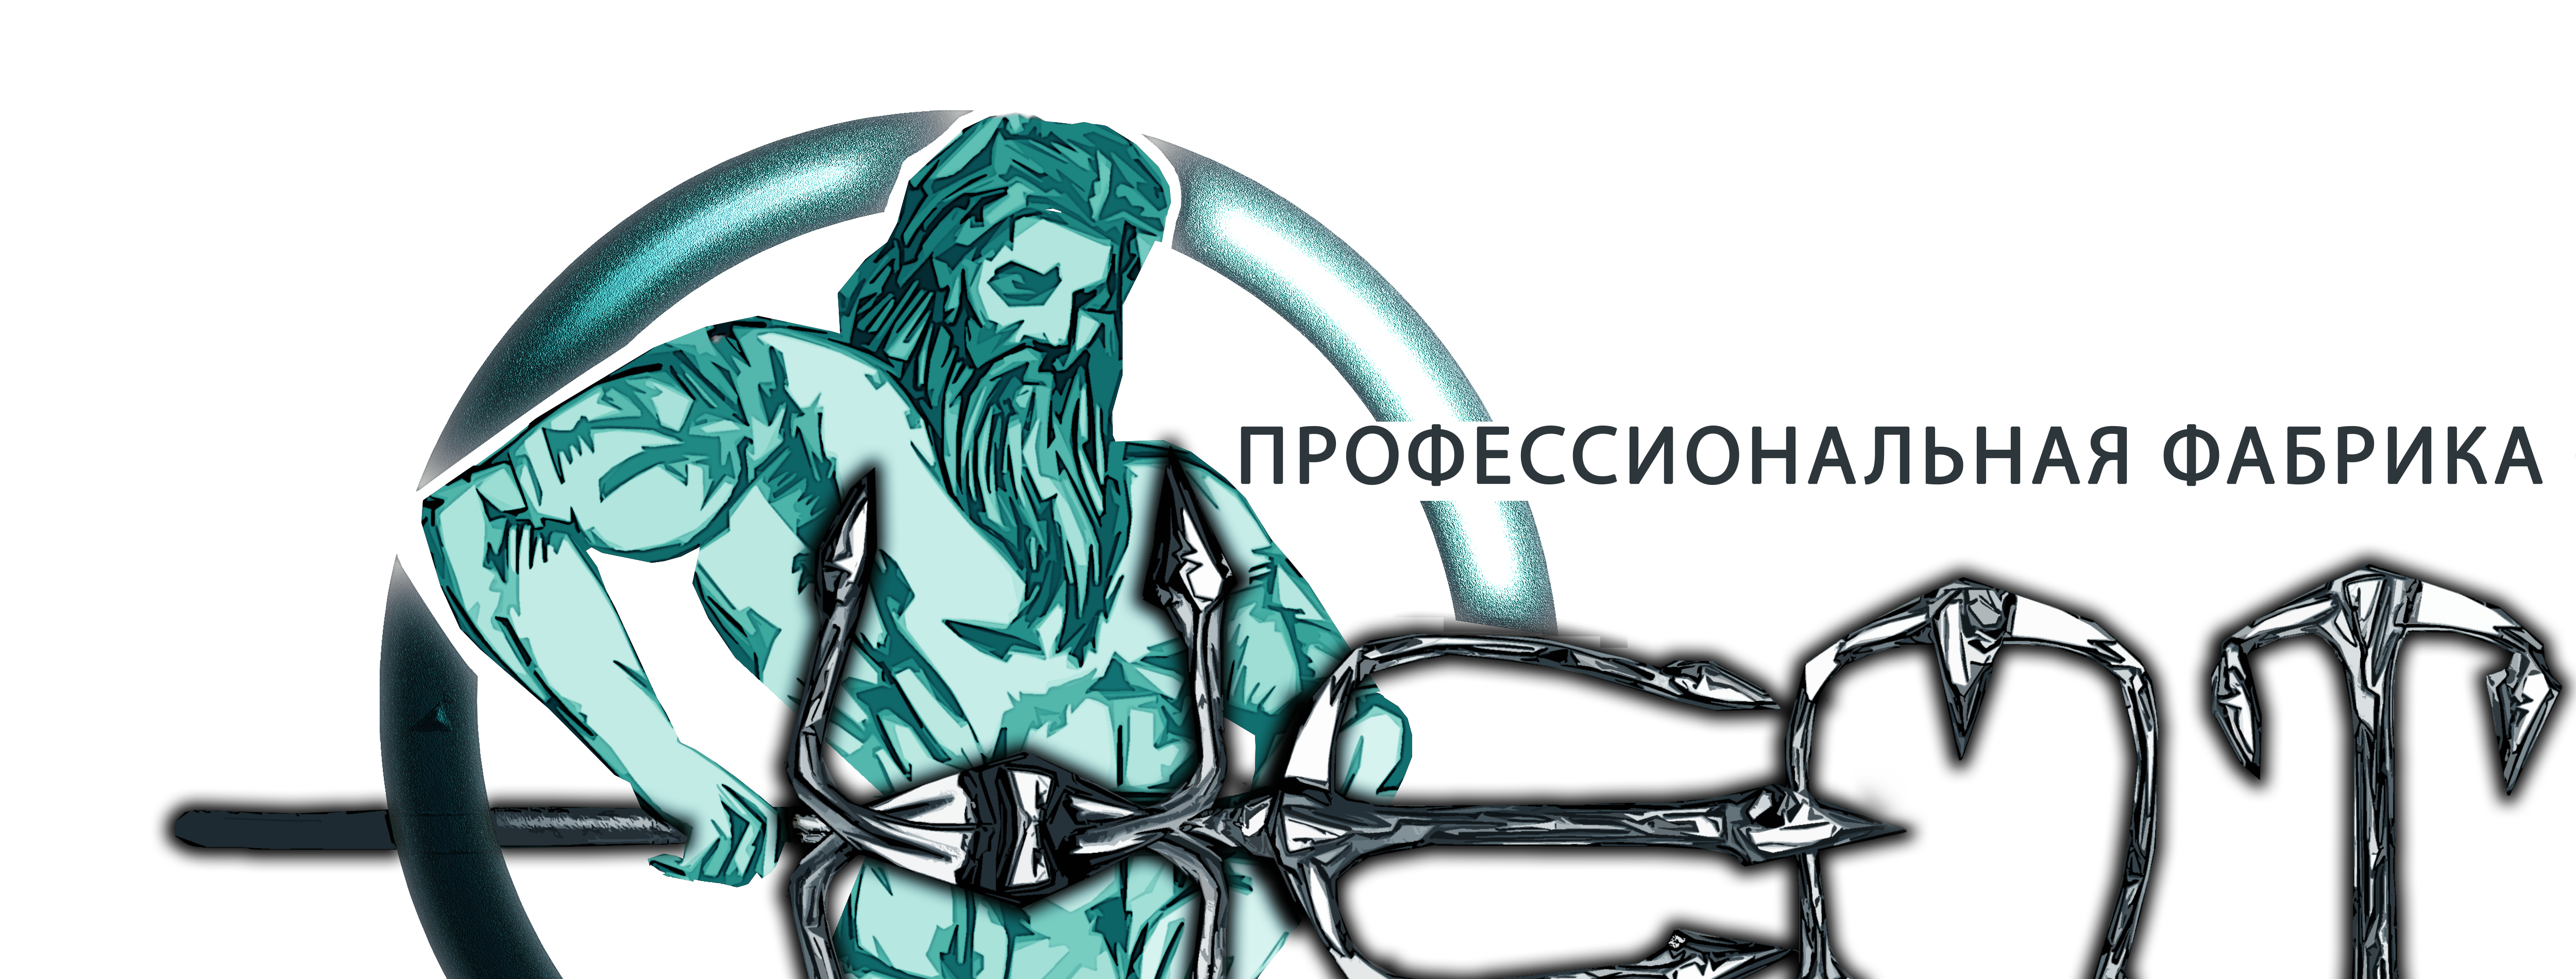 Стирка ковров логотип. Стирка ковров эмблема. Нептун стирка ковров Новосибирск. Логотип для стирки ковров фото.